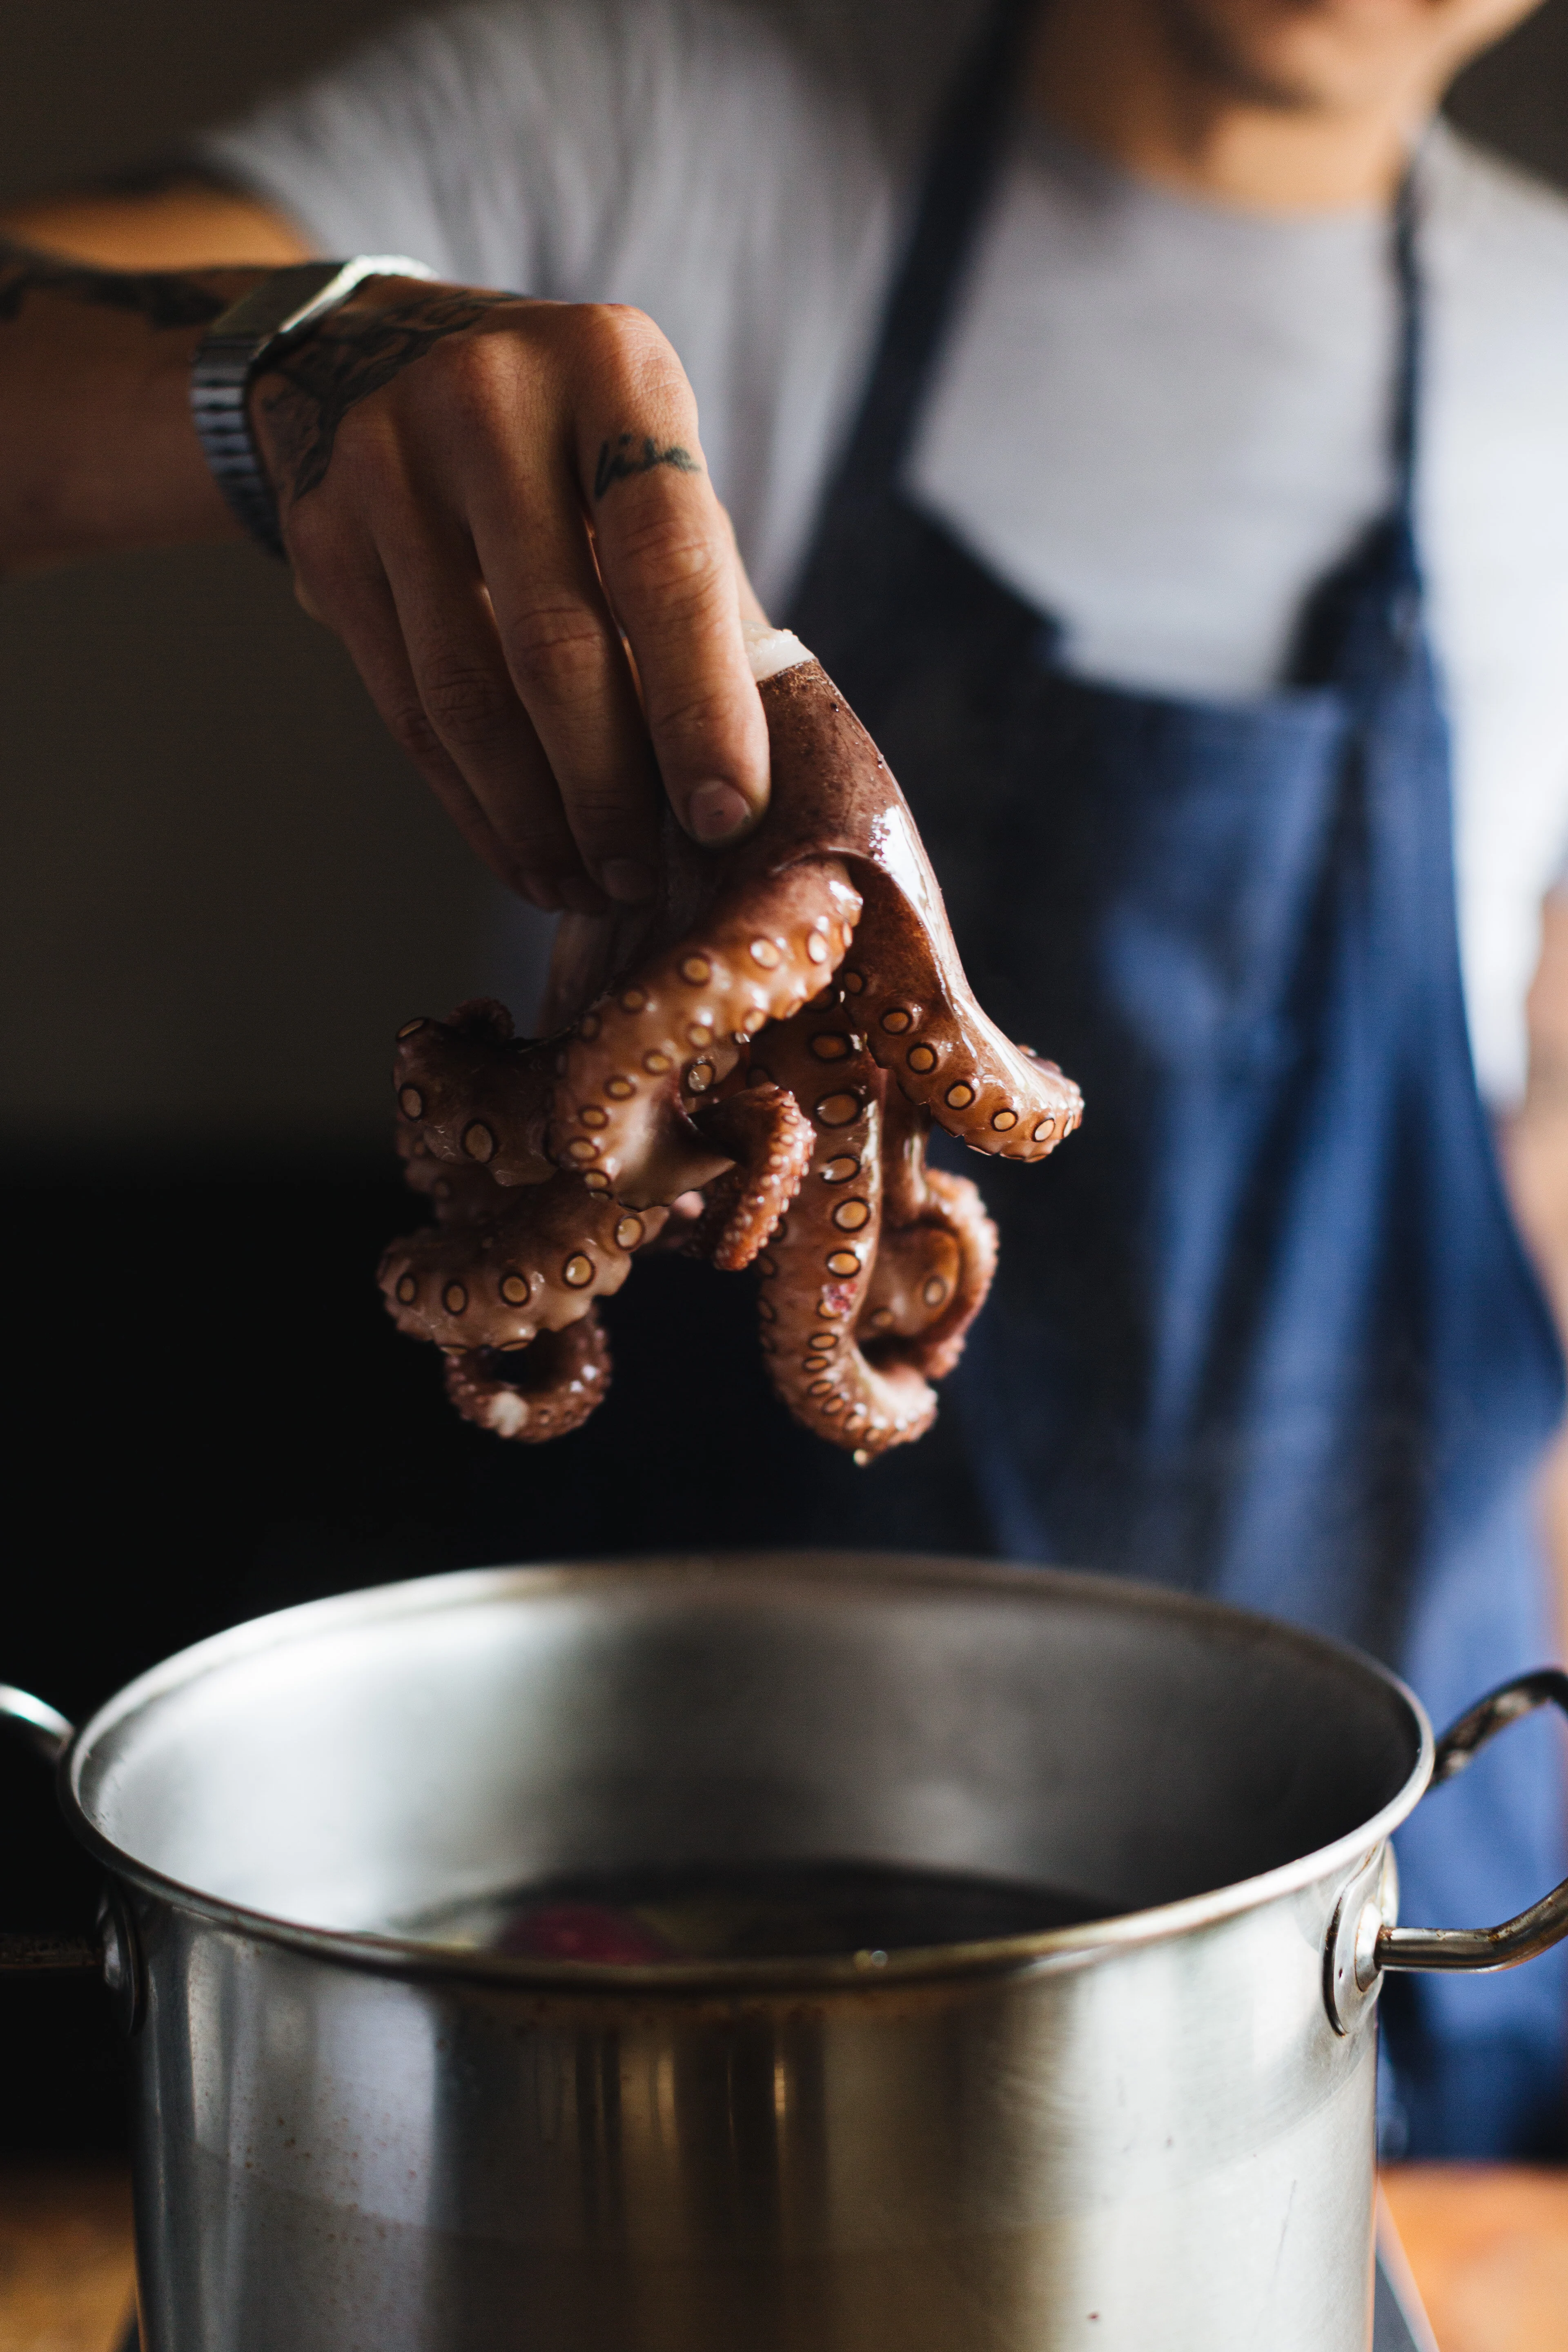 Octopus Cooking